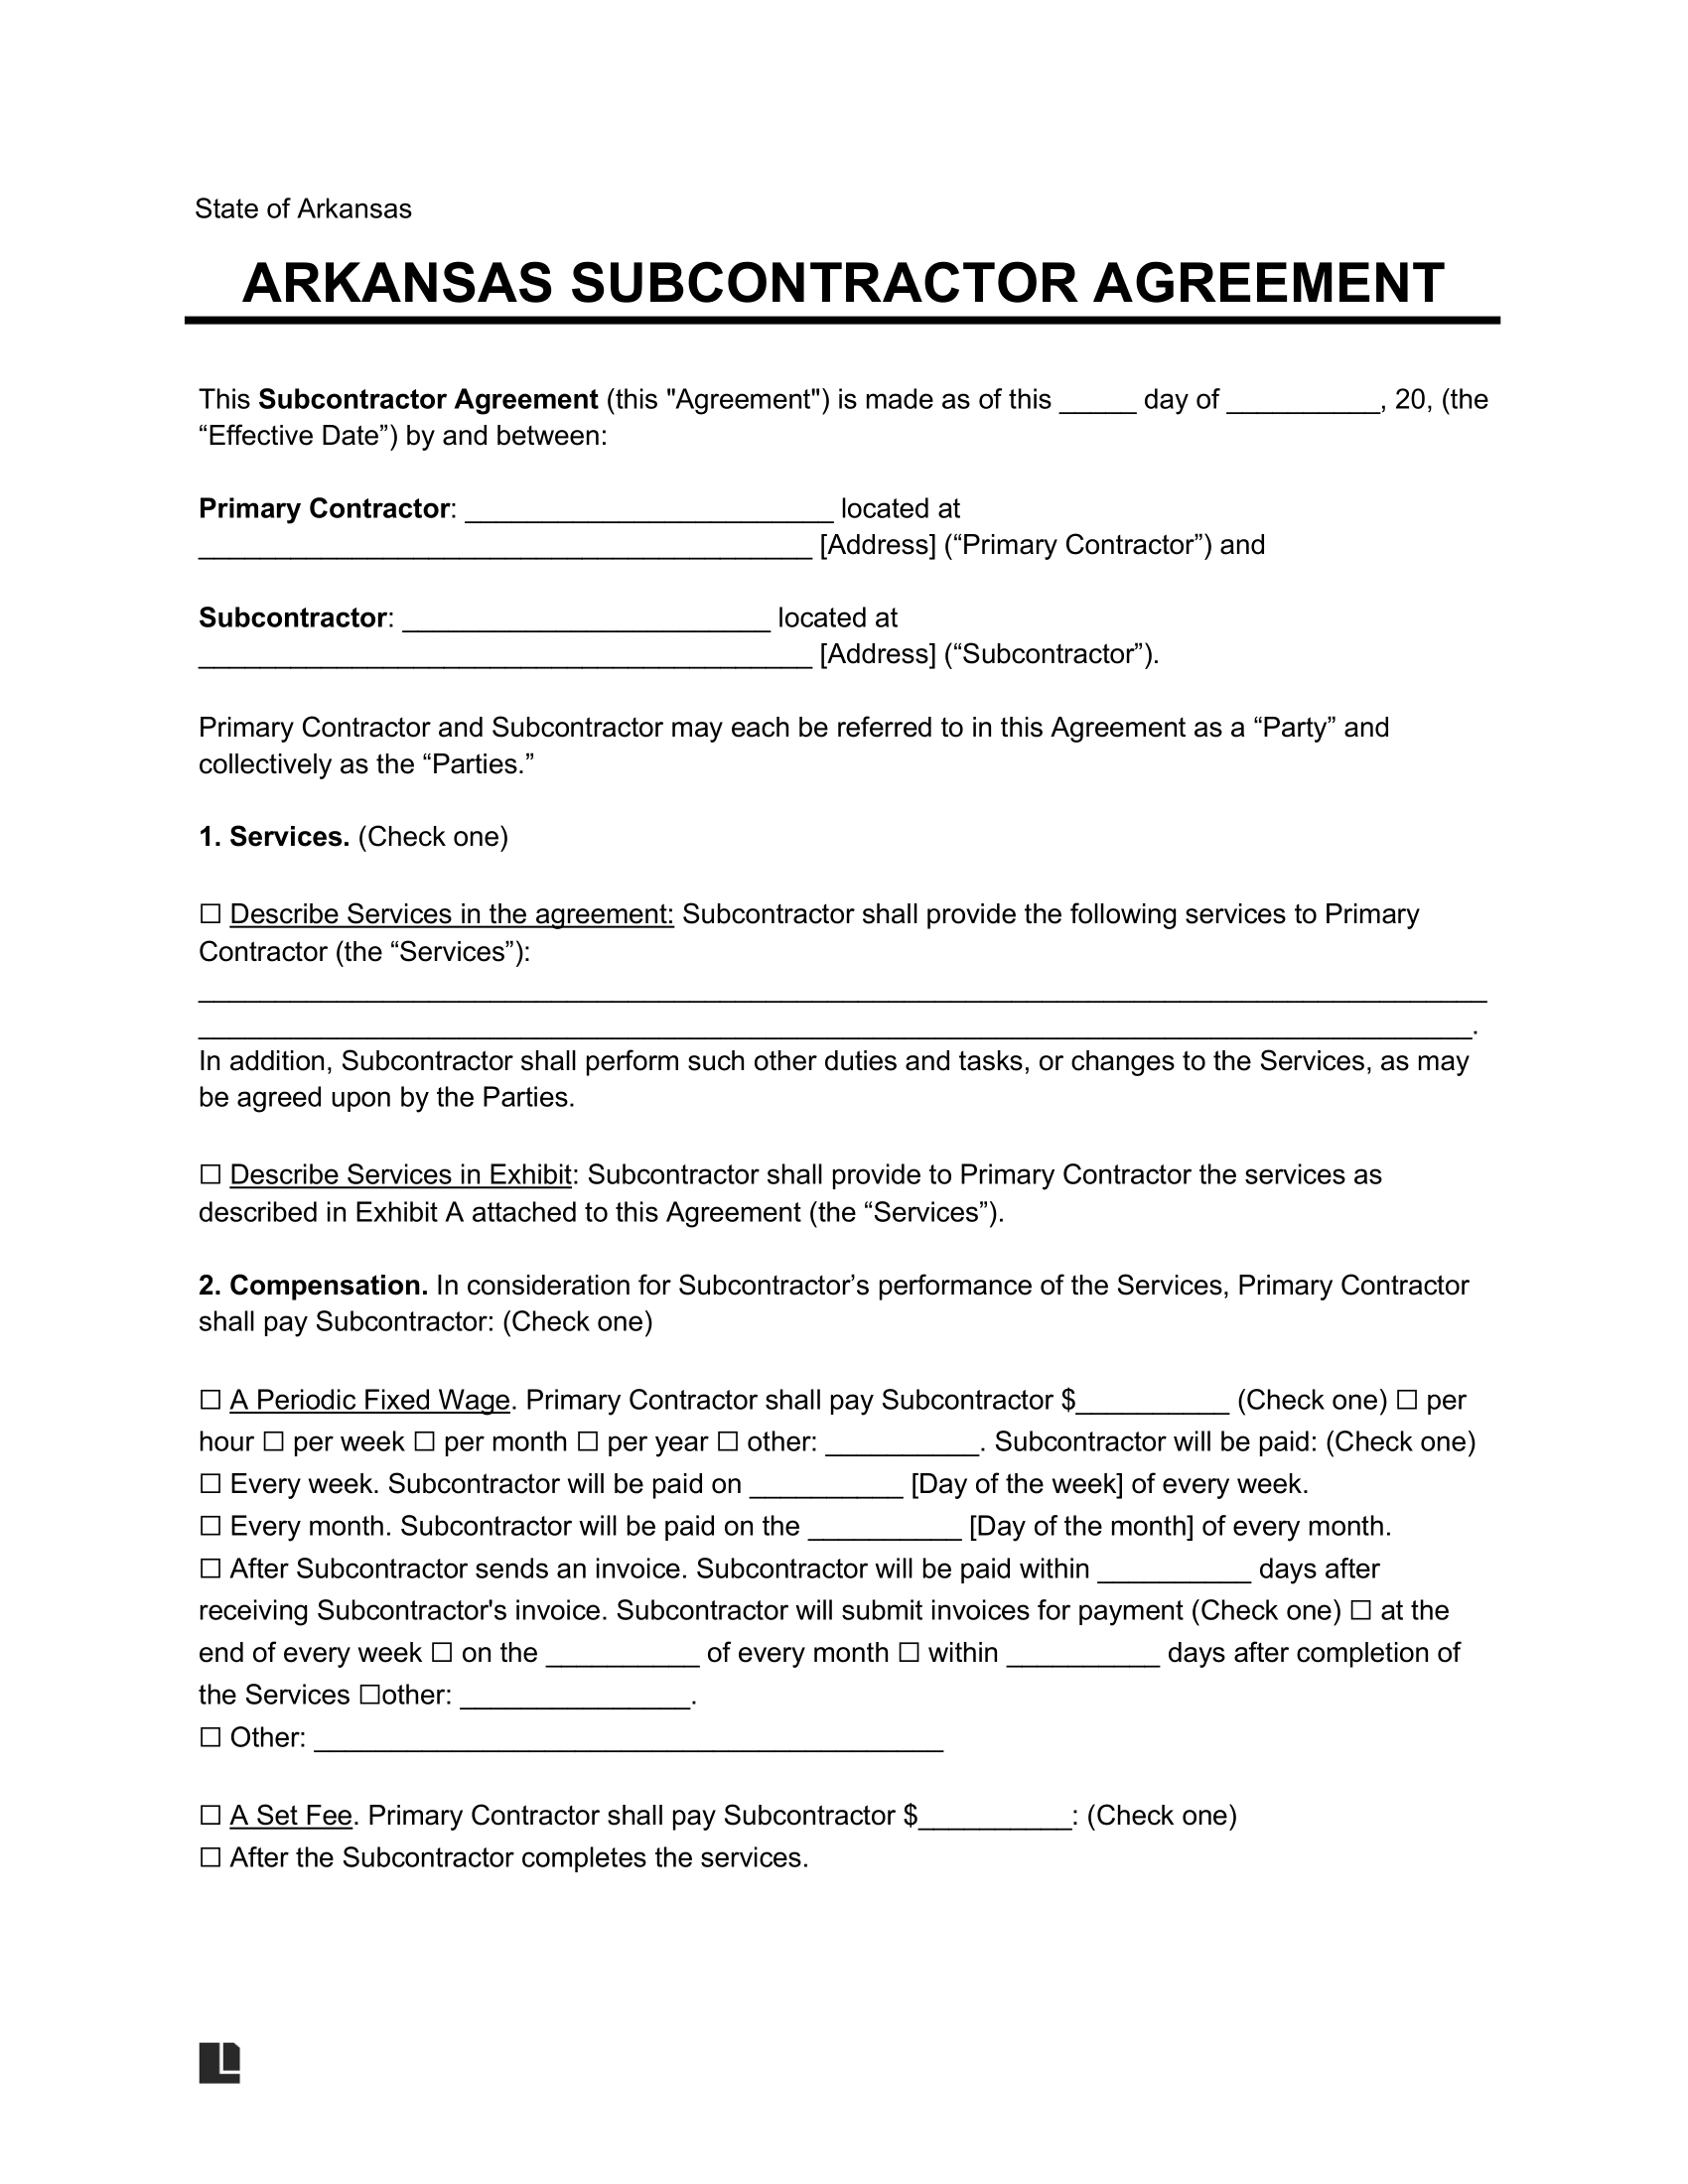 arkansas subcontractor agreement template